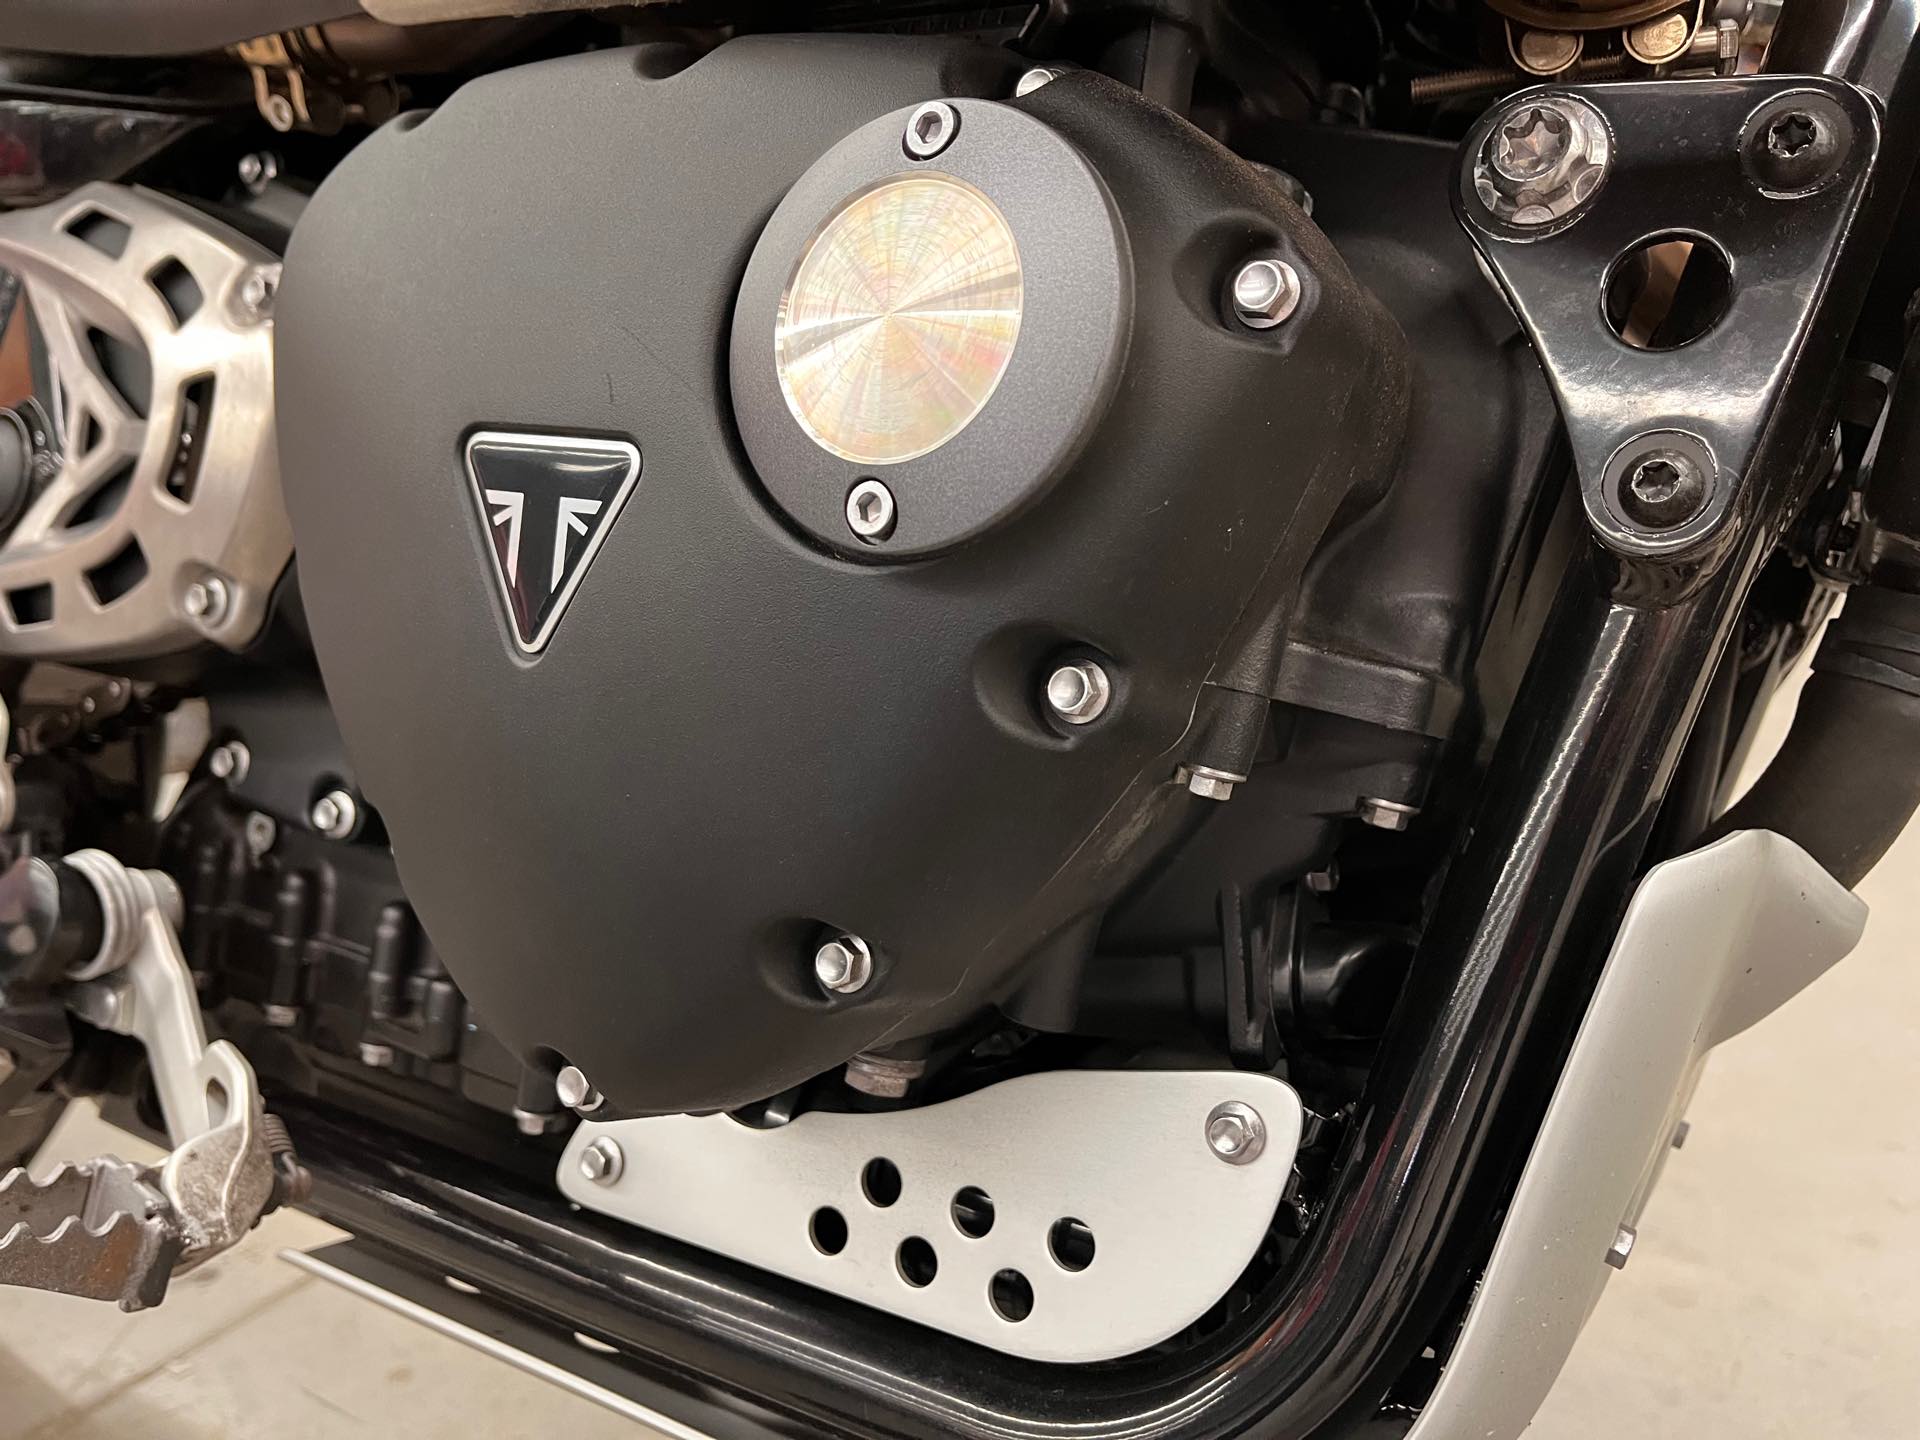 2020 Triumph Scrambler 1200 XC at Aces Motorcycles - Denver